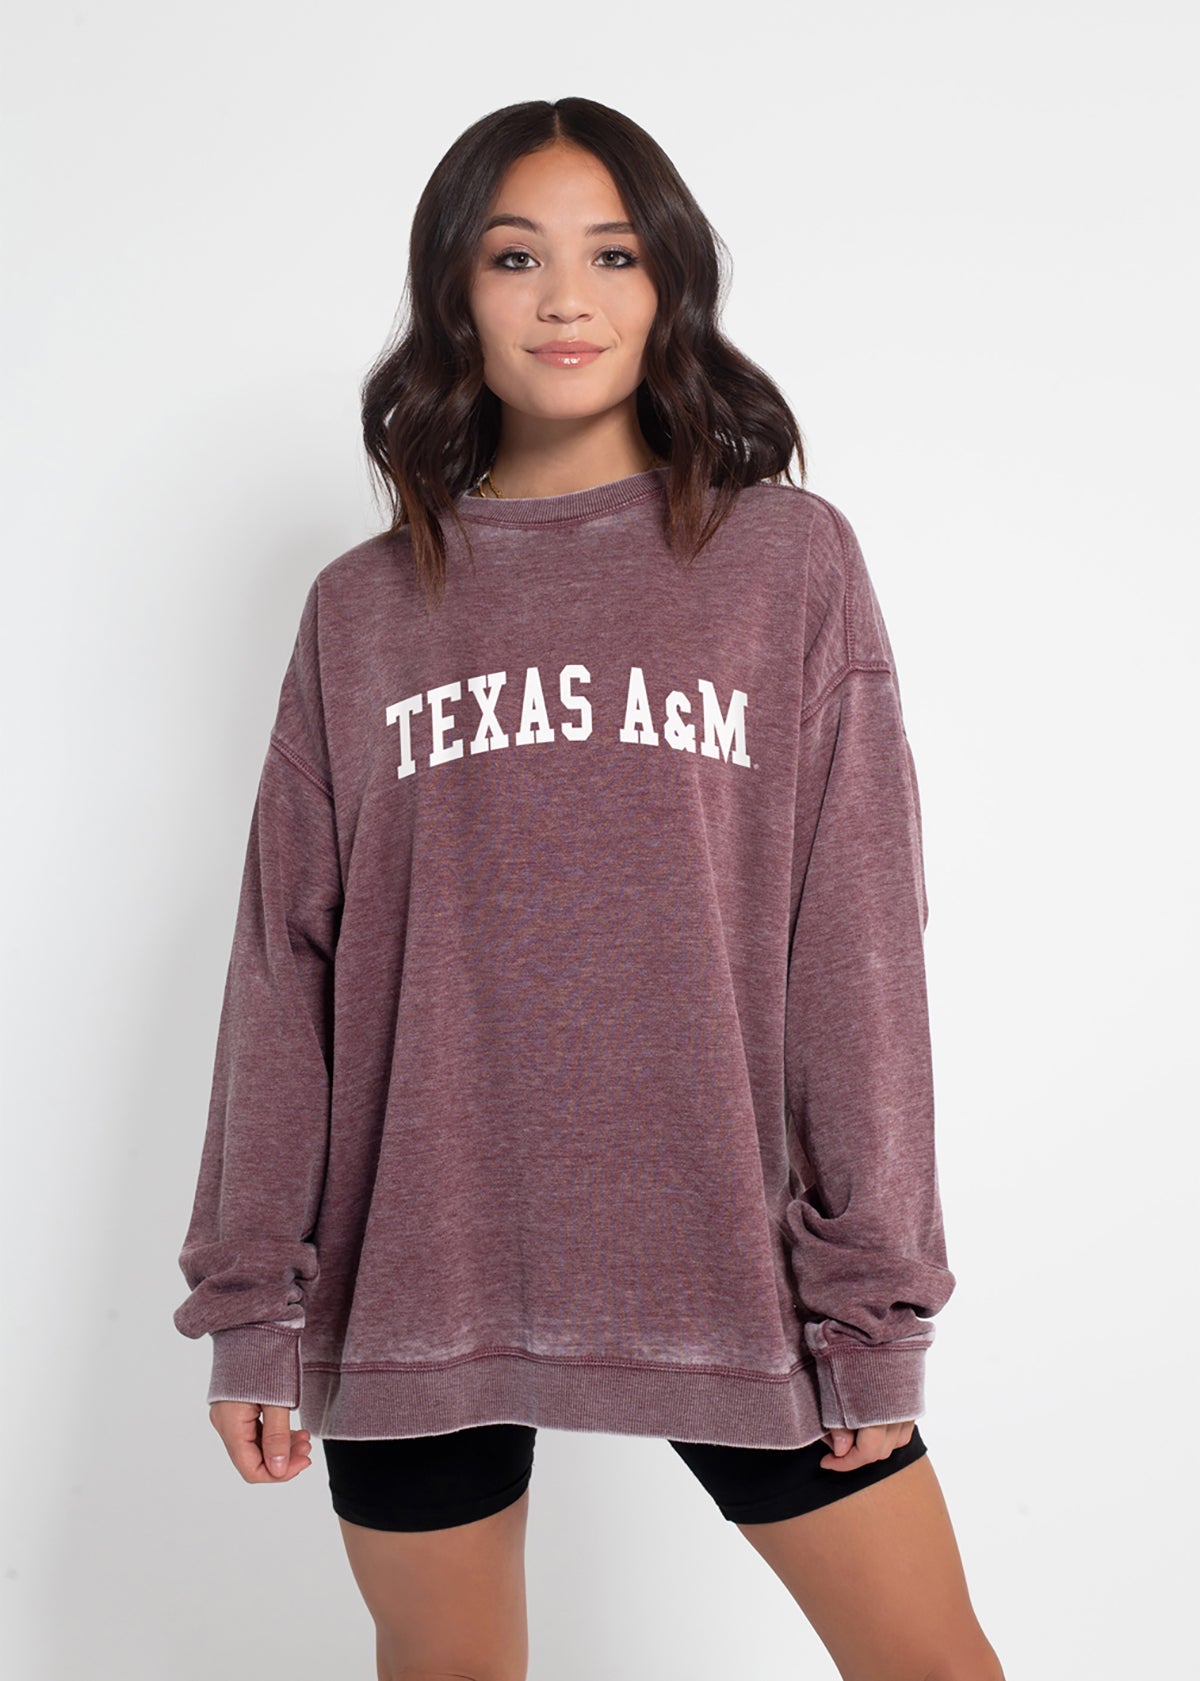 Texas A&M Aggies sweatshirt